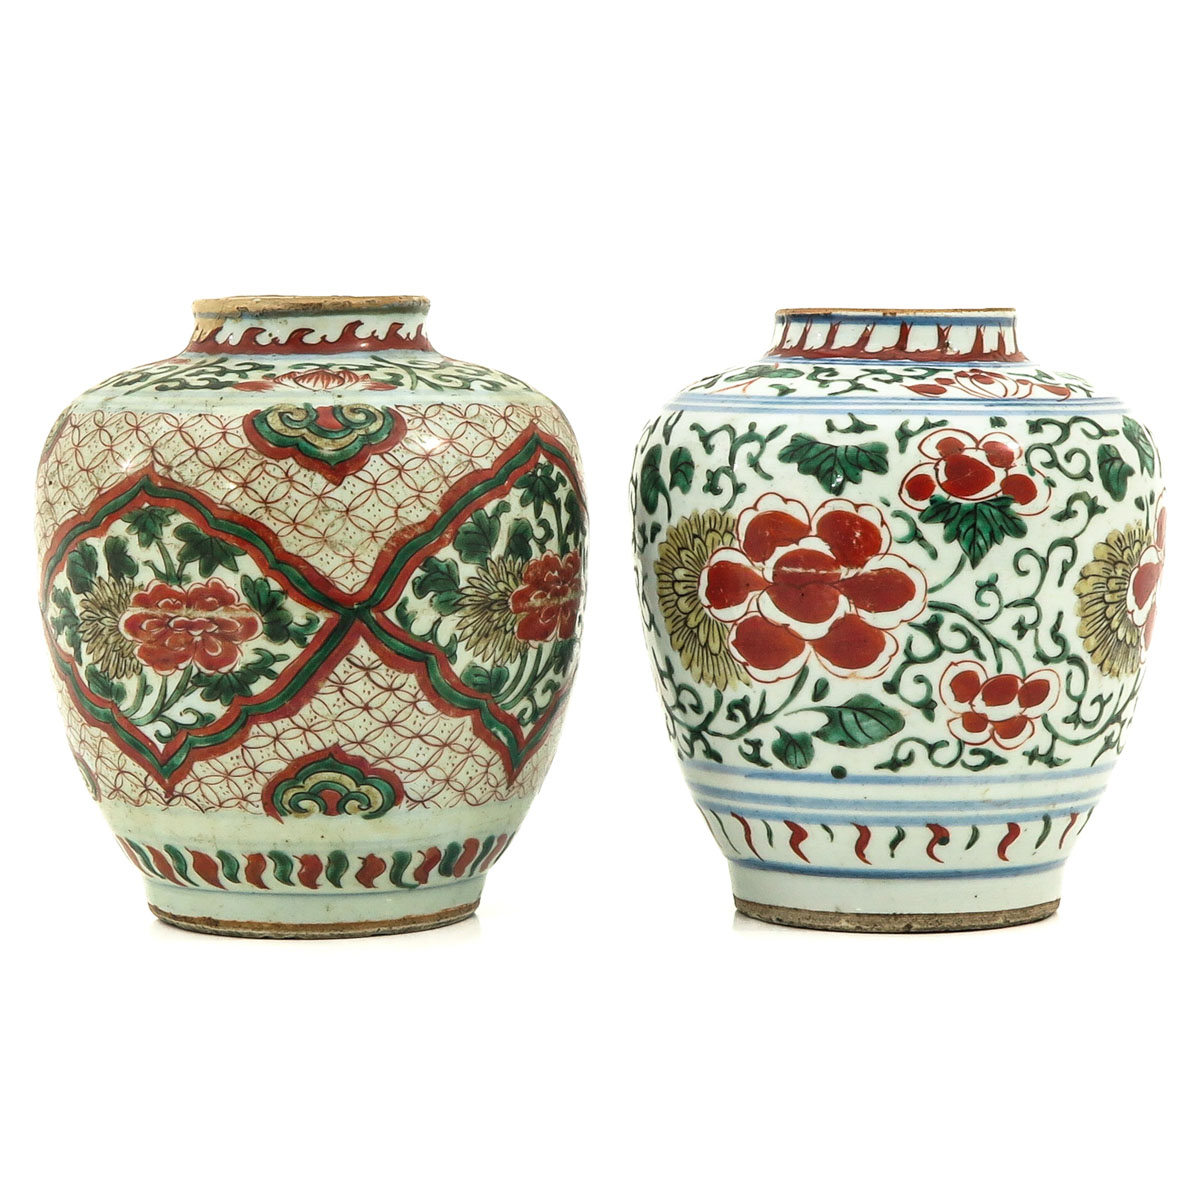 A Lot of 2 Wucai Decor Jars - Image 4 of 10